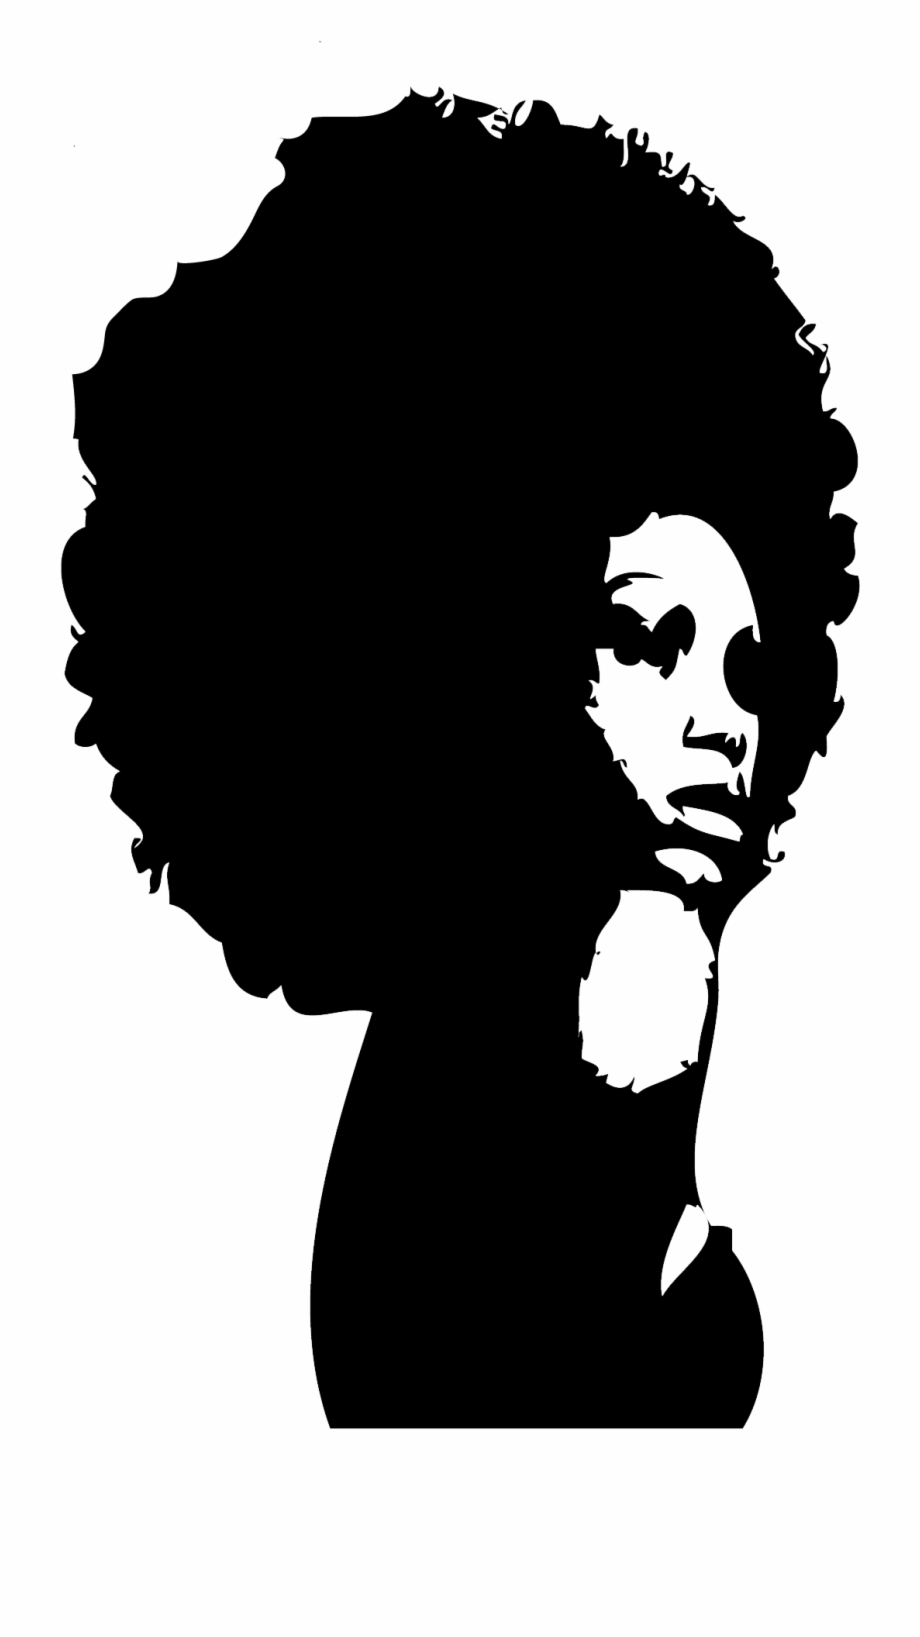 black woman face silhouette
